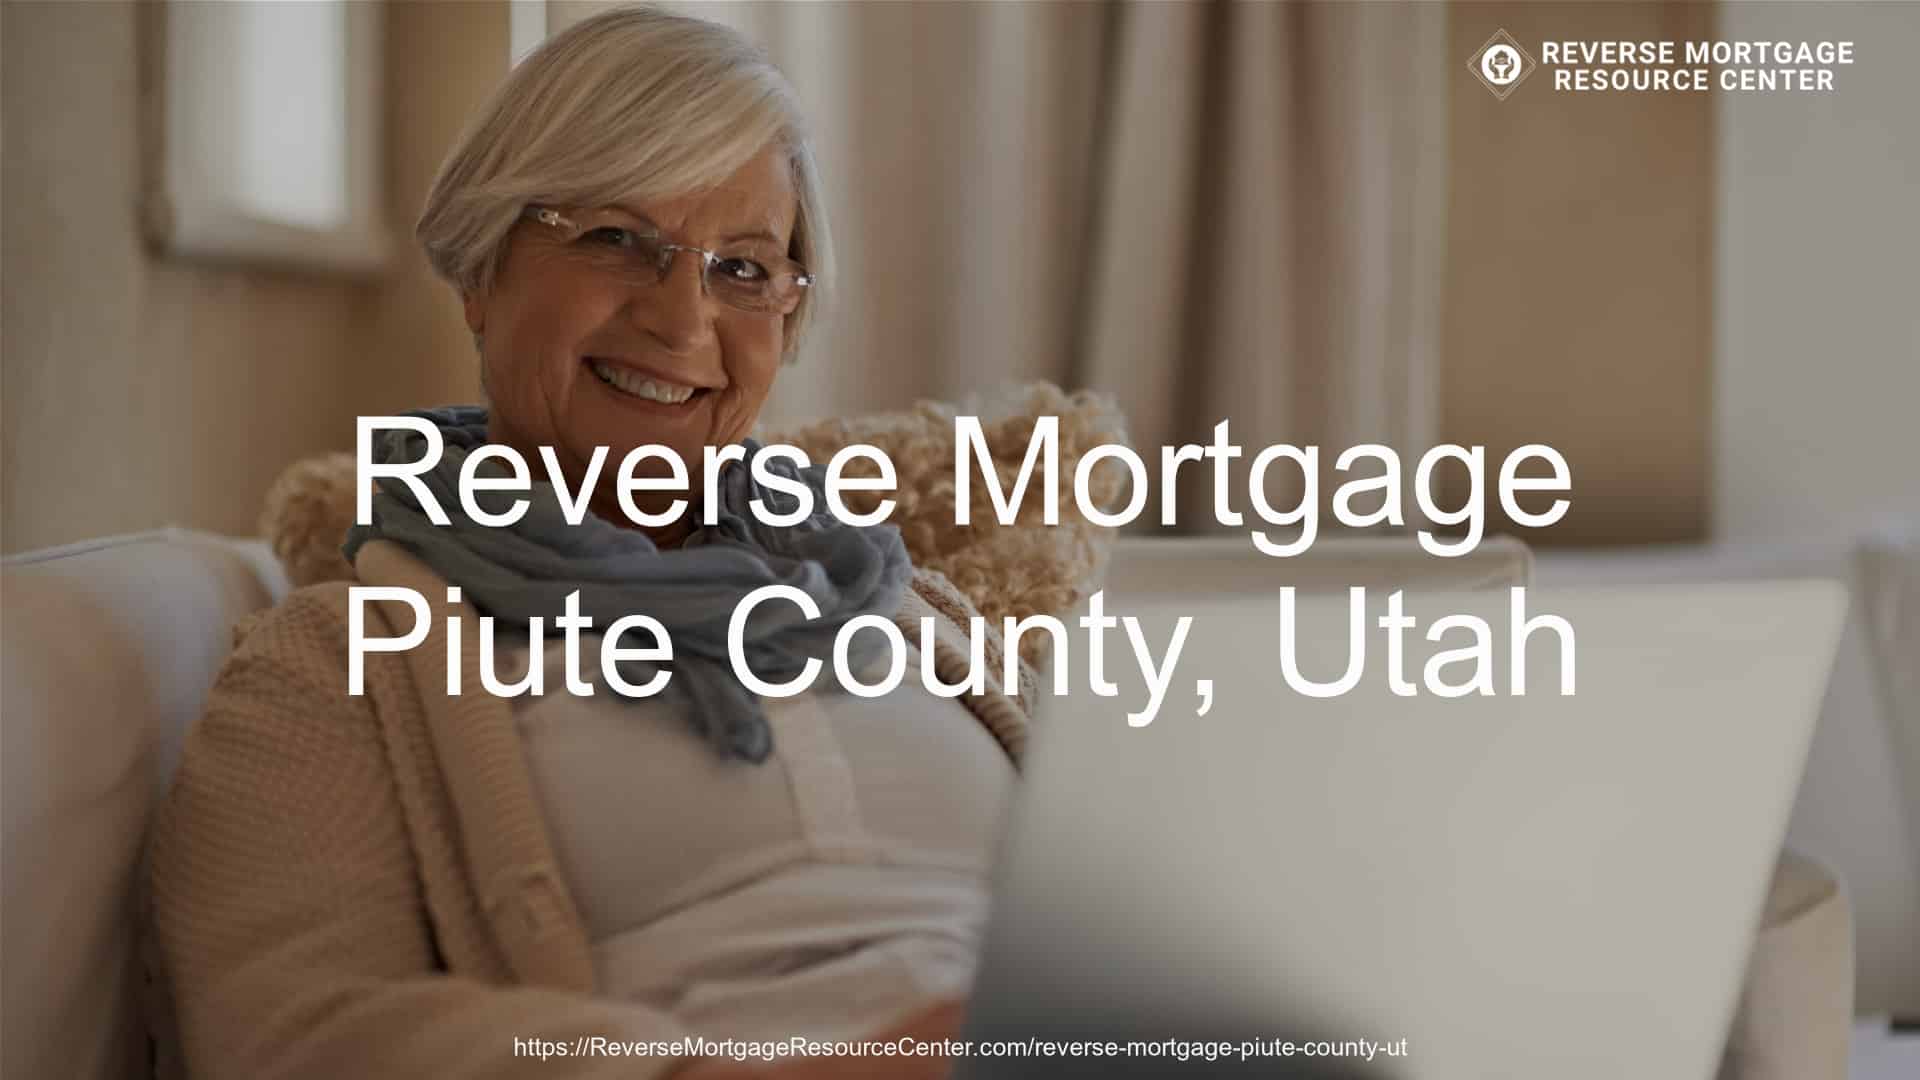 Reverse Mortgage Loans in Piute County Utah